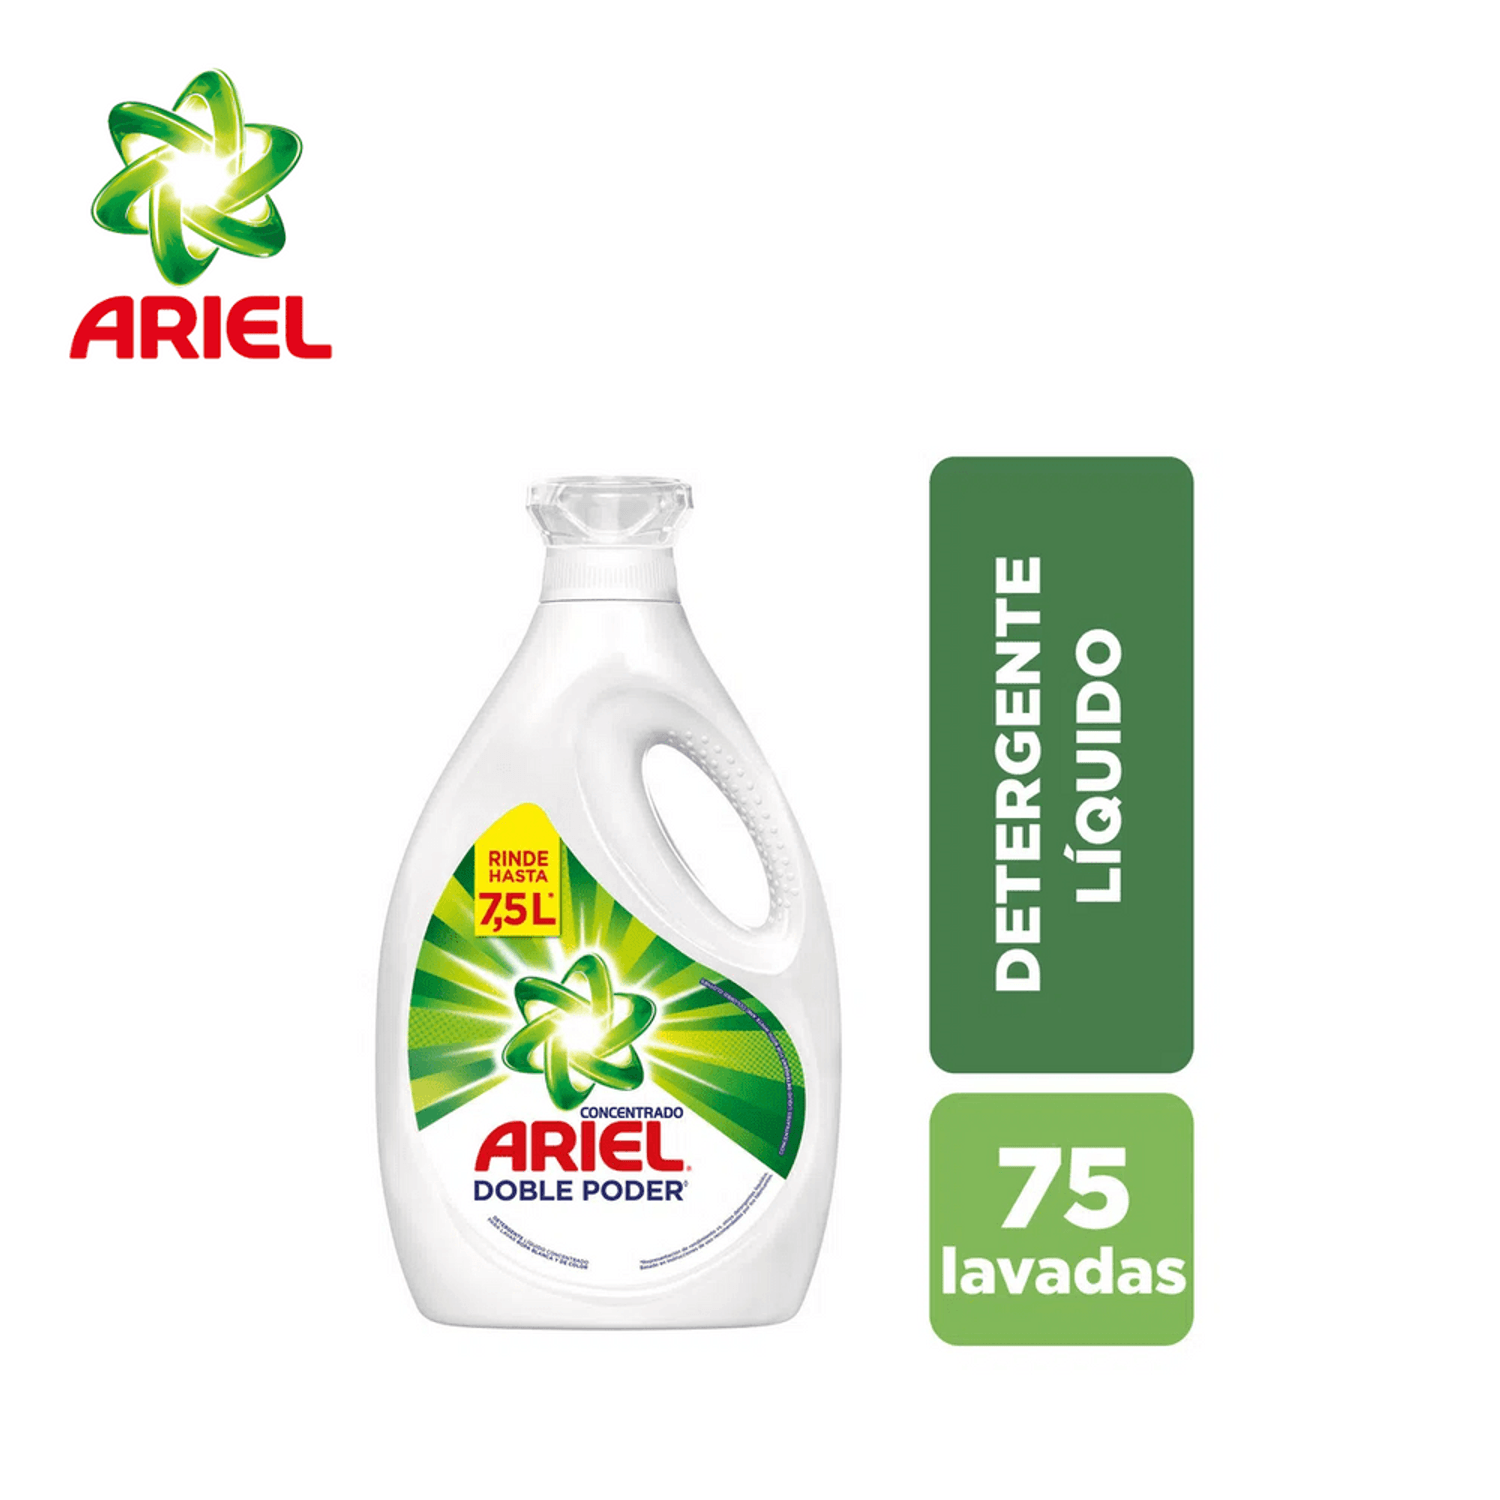 ARIEL PROFESIONAL ORIGINAL detergente líquido, Detergentes Ariel - Perfumes  Club